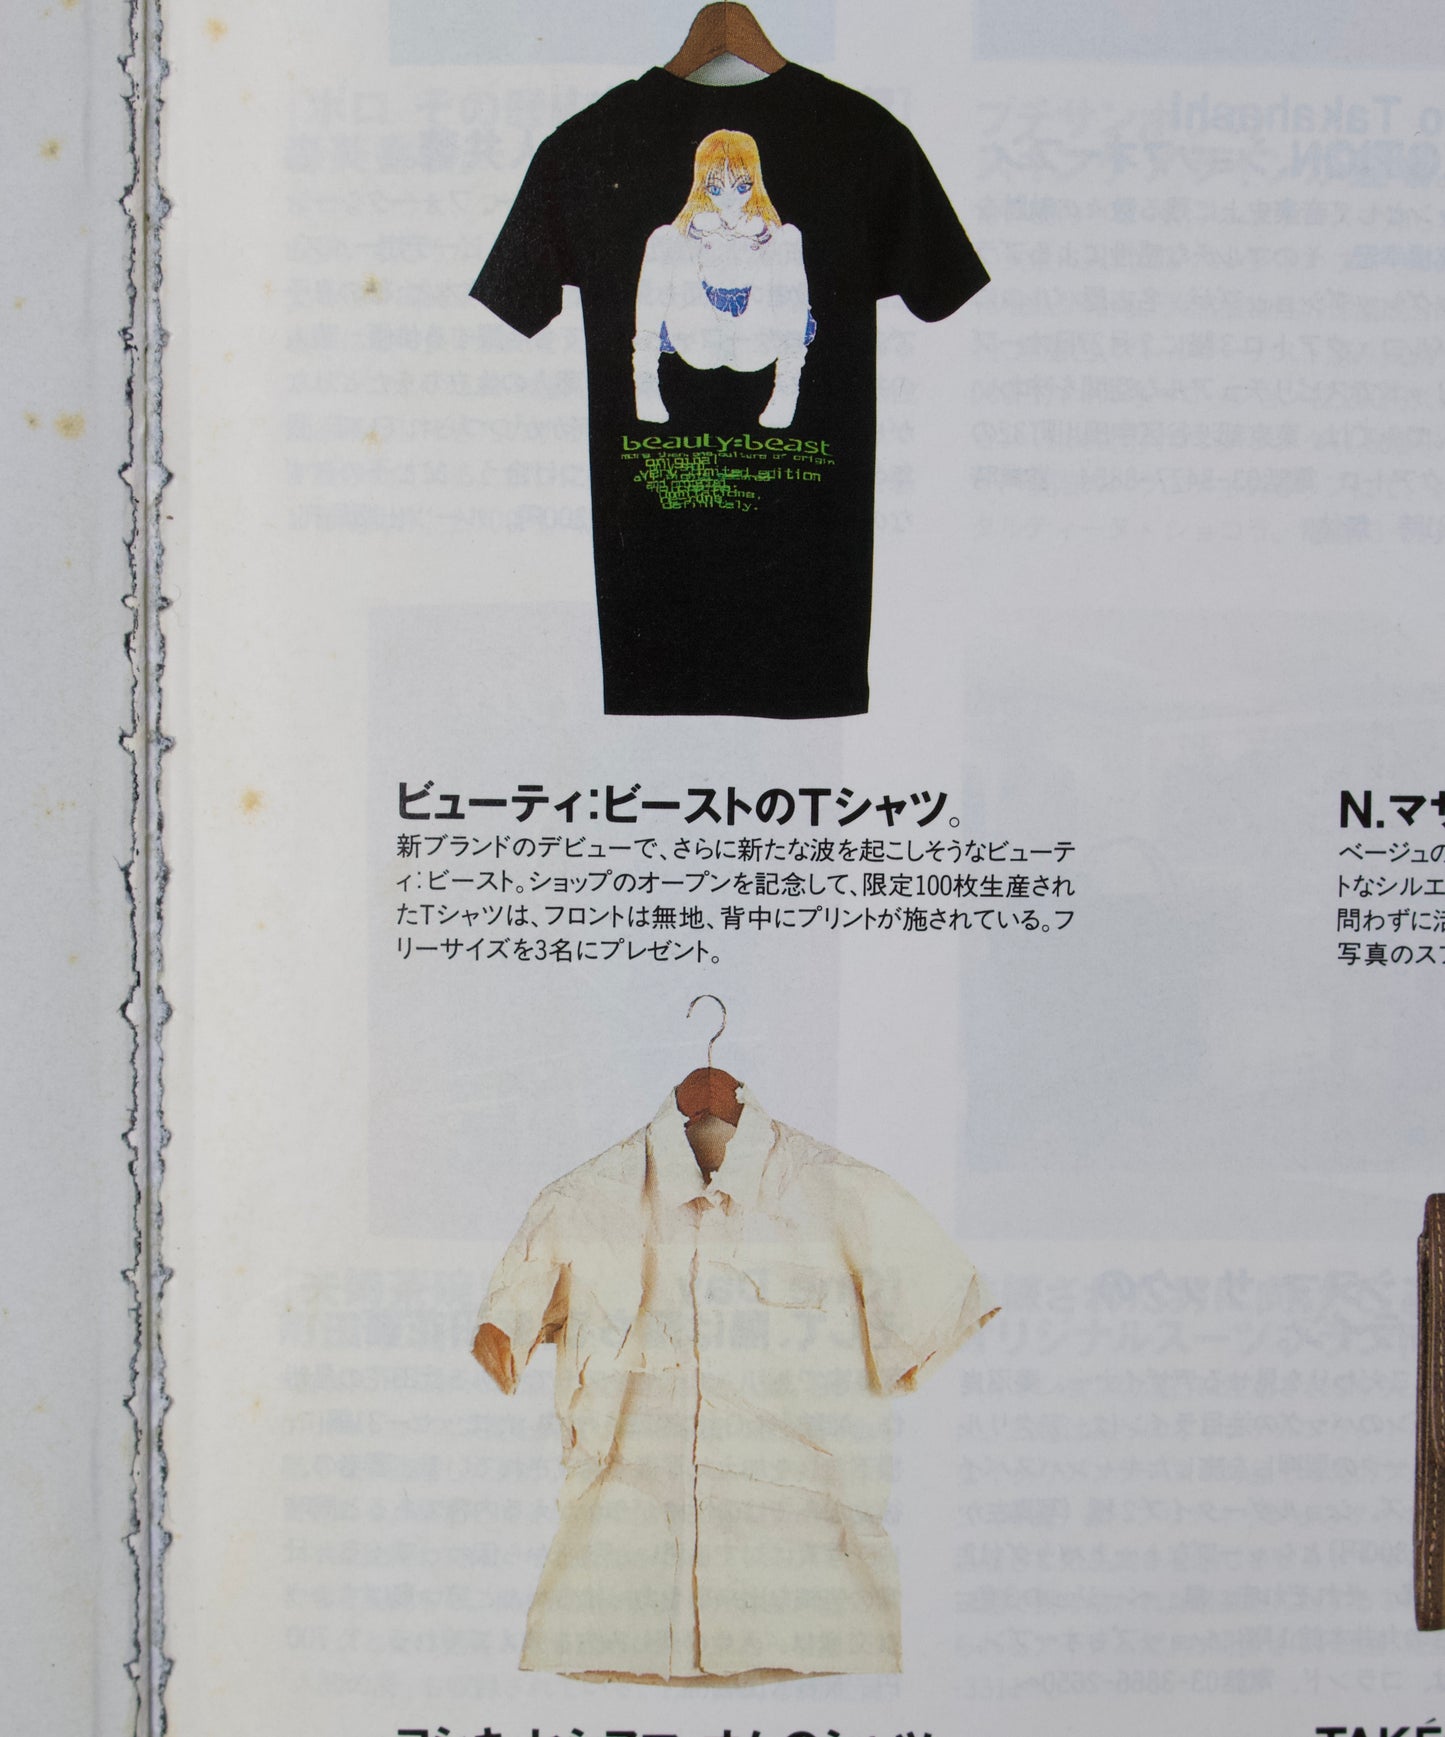 Mr High Fashion Issue April, 1998 Vintage Japanese Fashion Magazine